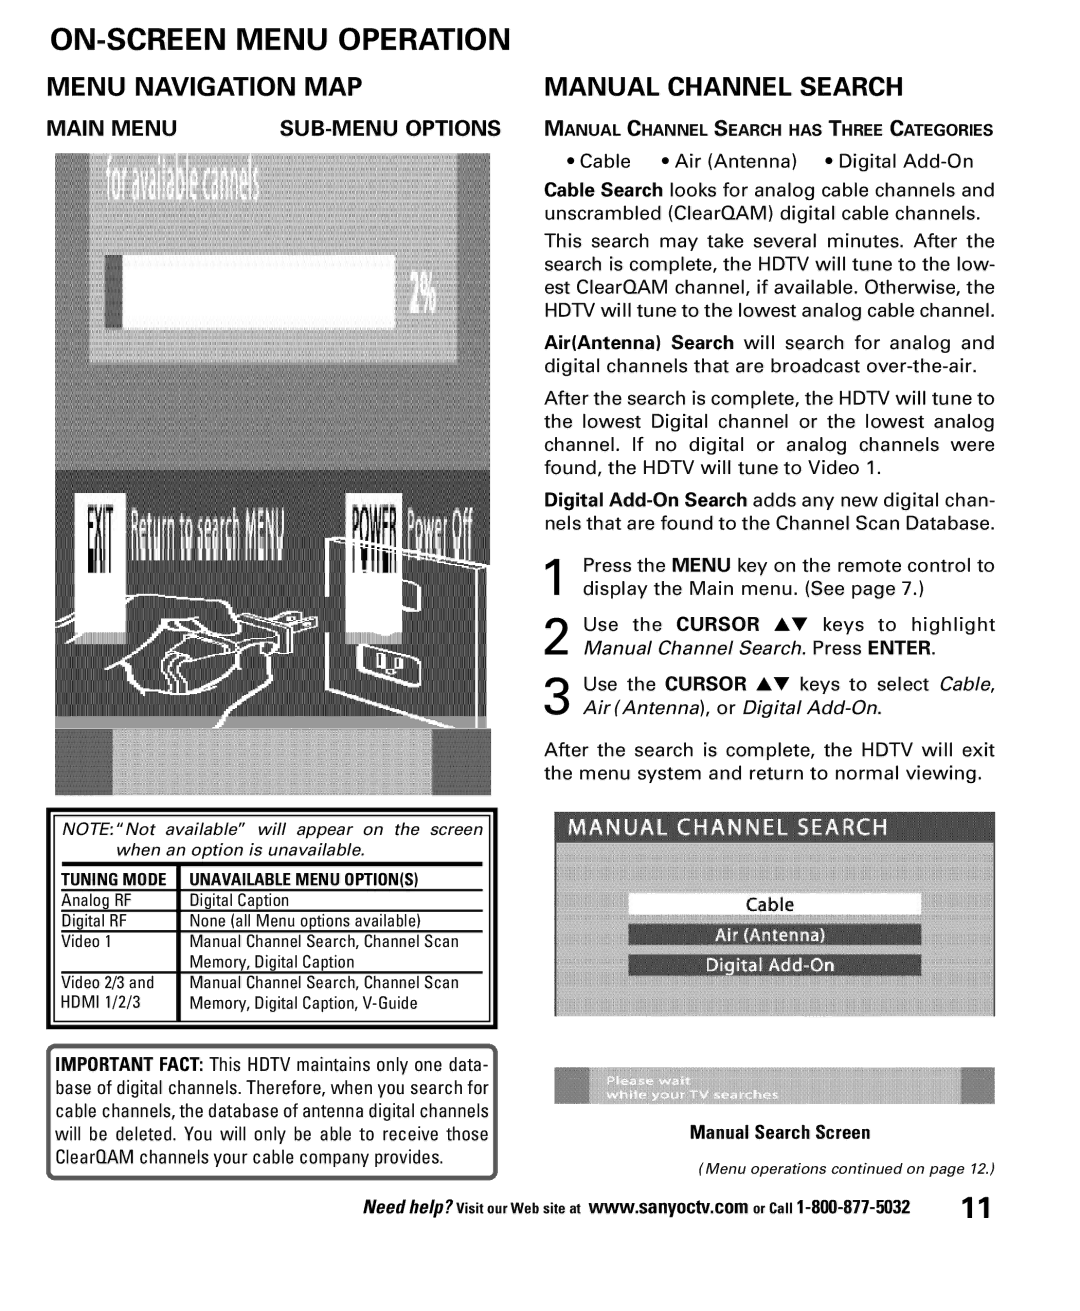 Sanyo DP52848 owner manual ON-SCREEN Menu Operation, Menu Navigation MAP Manual Channel Search, Manual Search Screen 